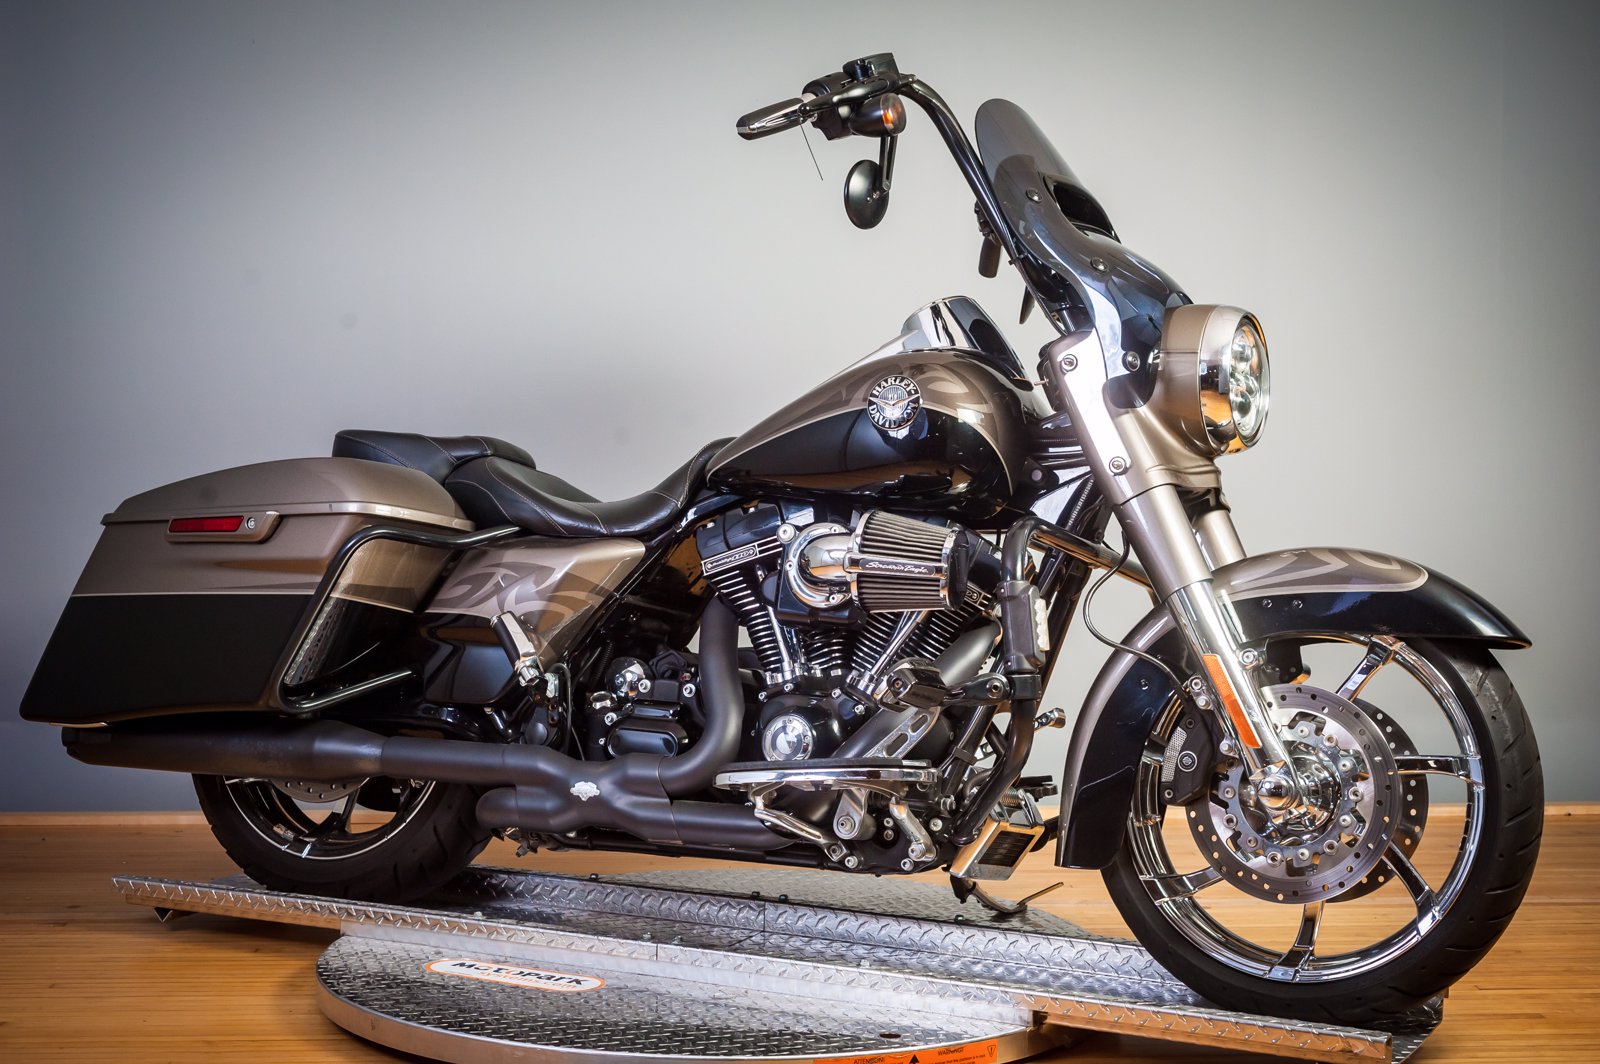 Pre-Owned 2014 Harley-Davidson Road King CVO FLHRSE Touring in N. Billerica #U961296 | High ...